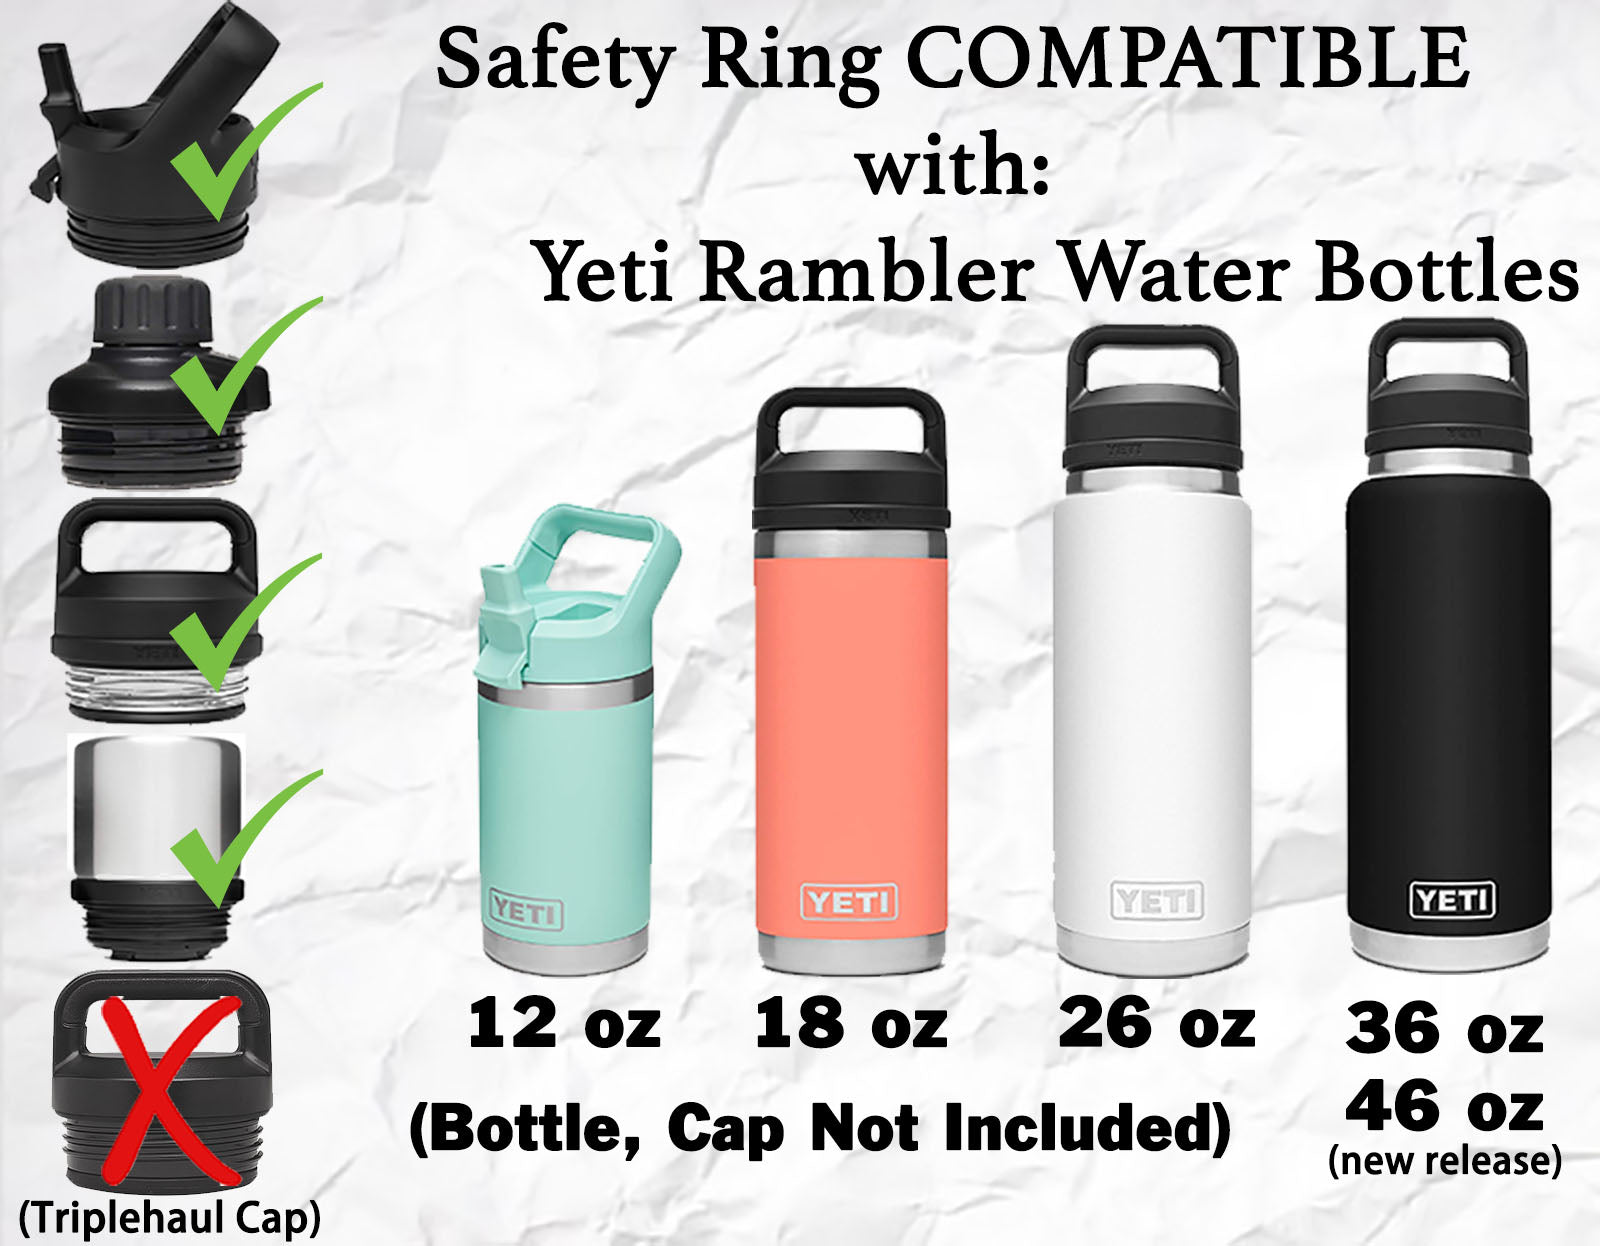 Yeti Rambler 26 Oz. Bottle, Hydration Packs